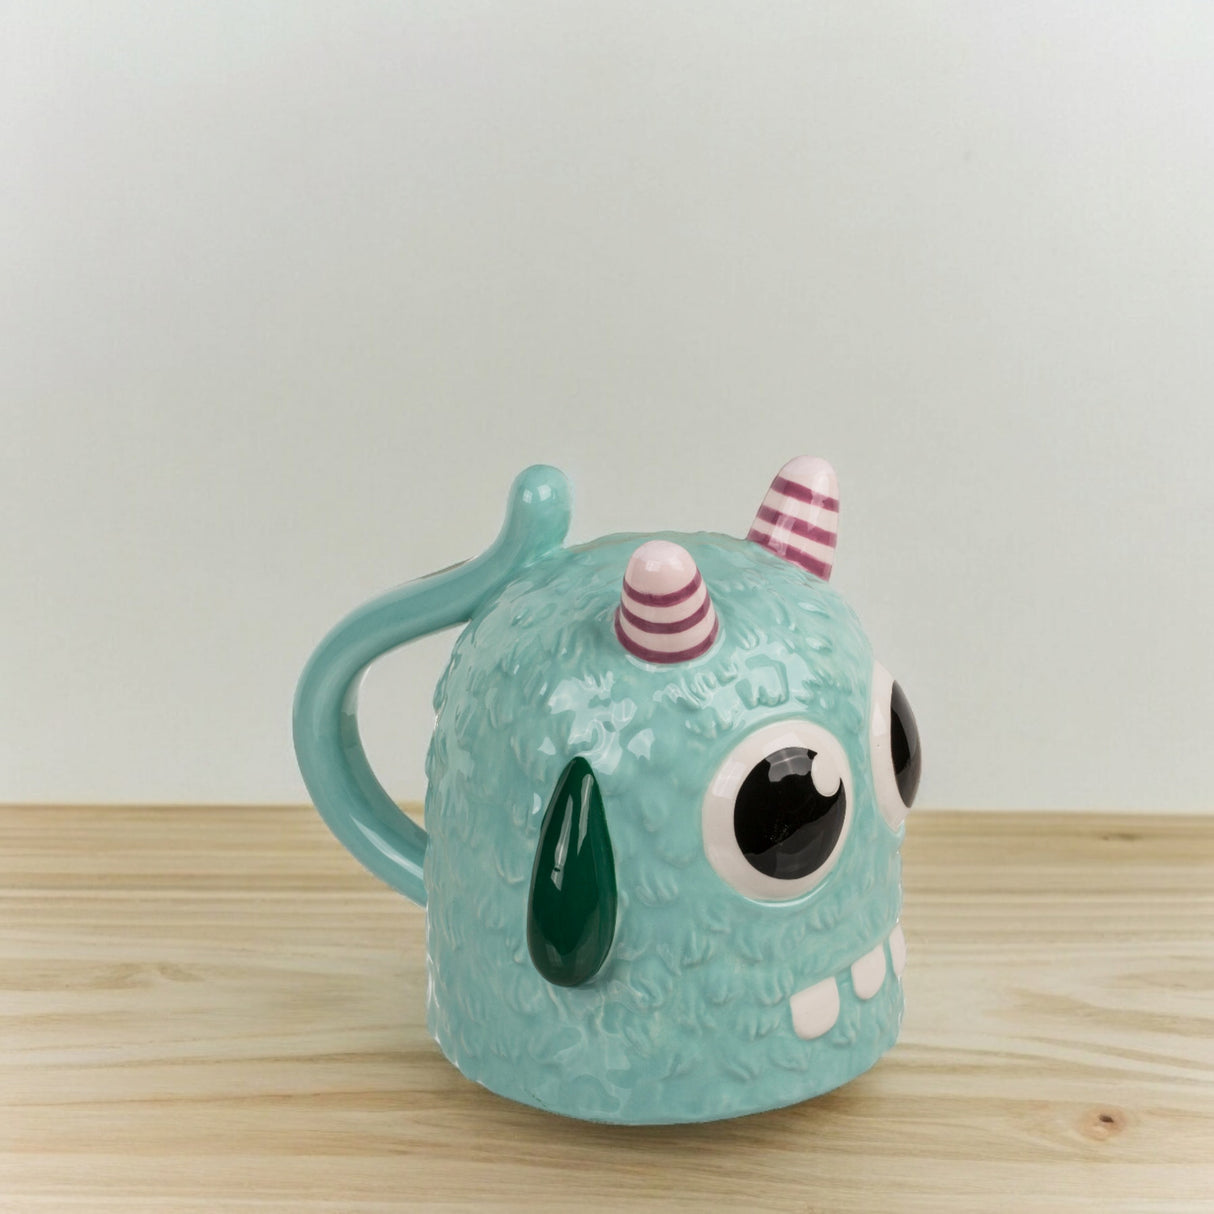 Türkises Monster kopfüber Kaffeebecher Kindertasse aus Keramik